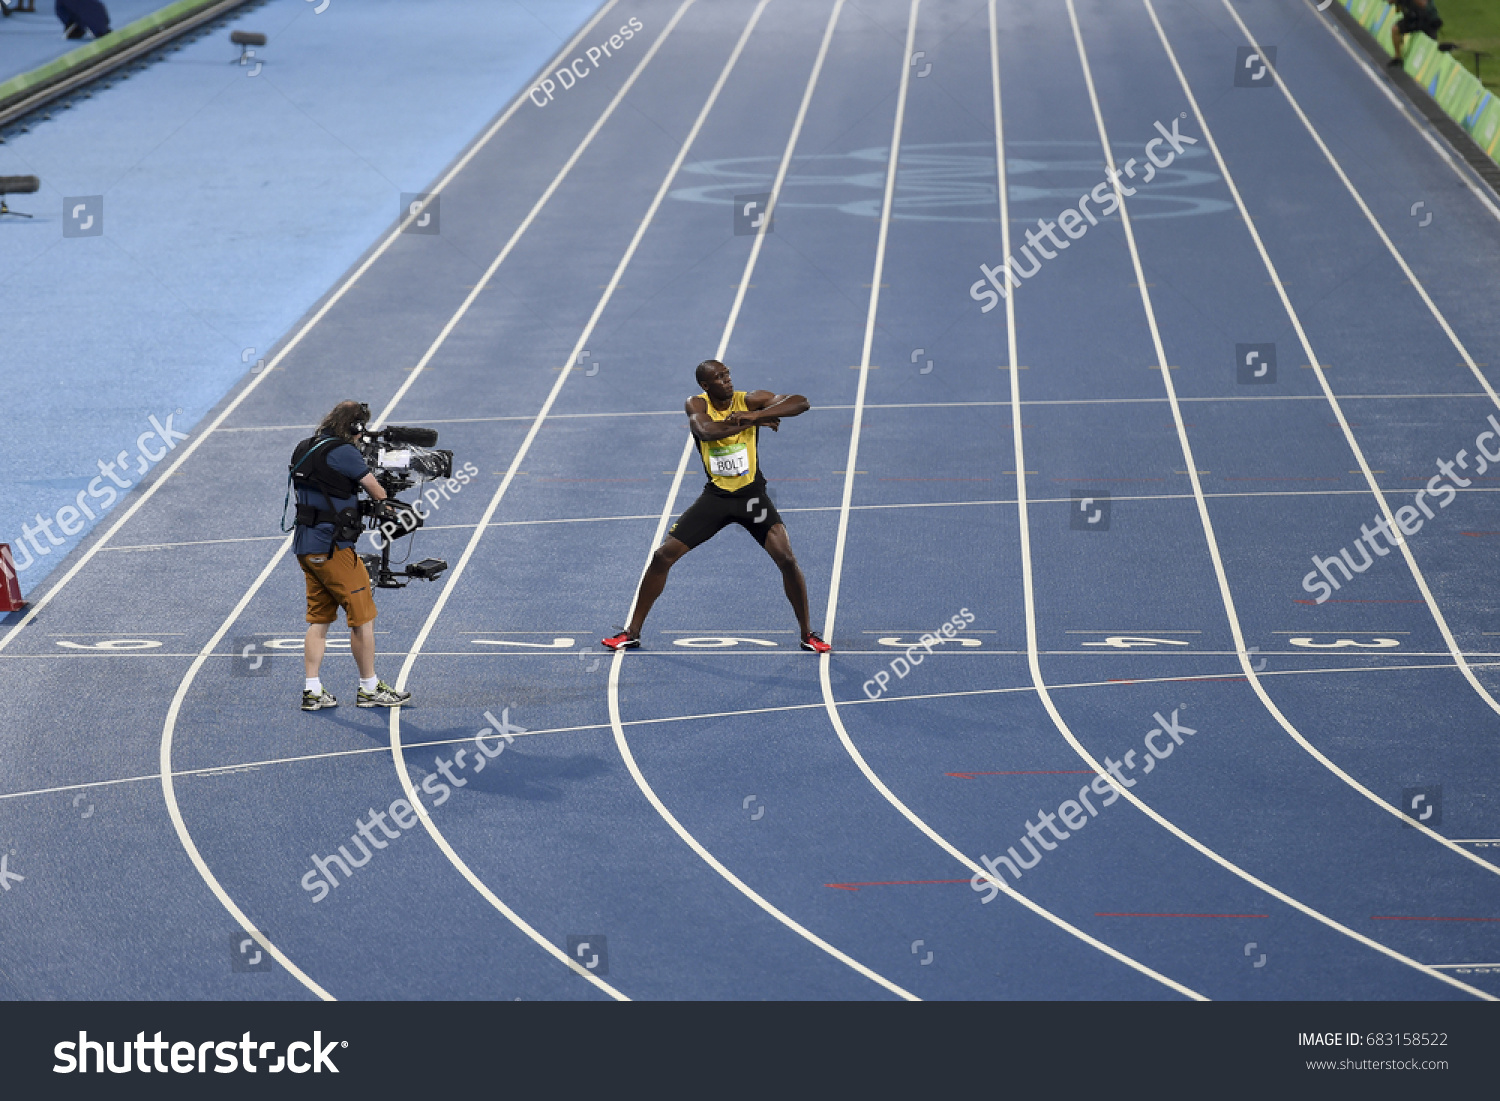 Rio de Janeiro, Brazil - august 18, 2016: Runner Usain Bolt (JAM) during 800m Men's run in the Rio 2016 Olympics #683158522